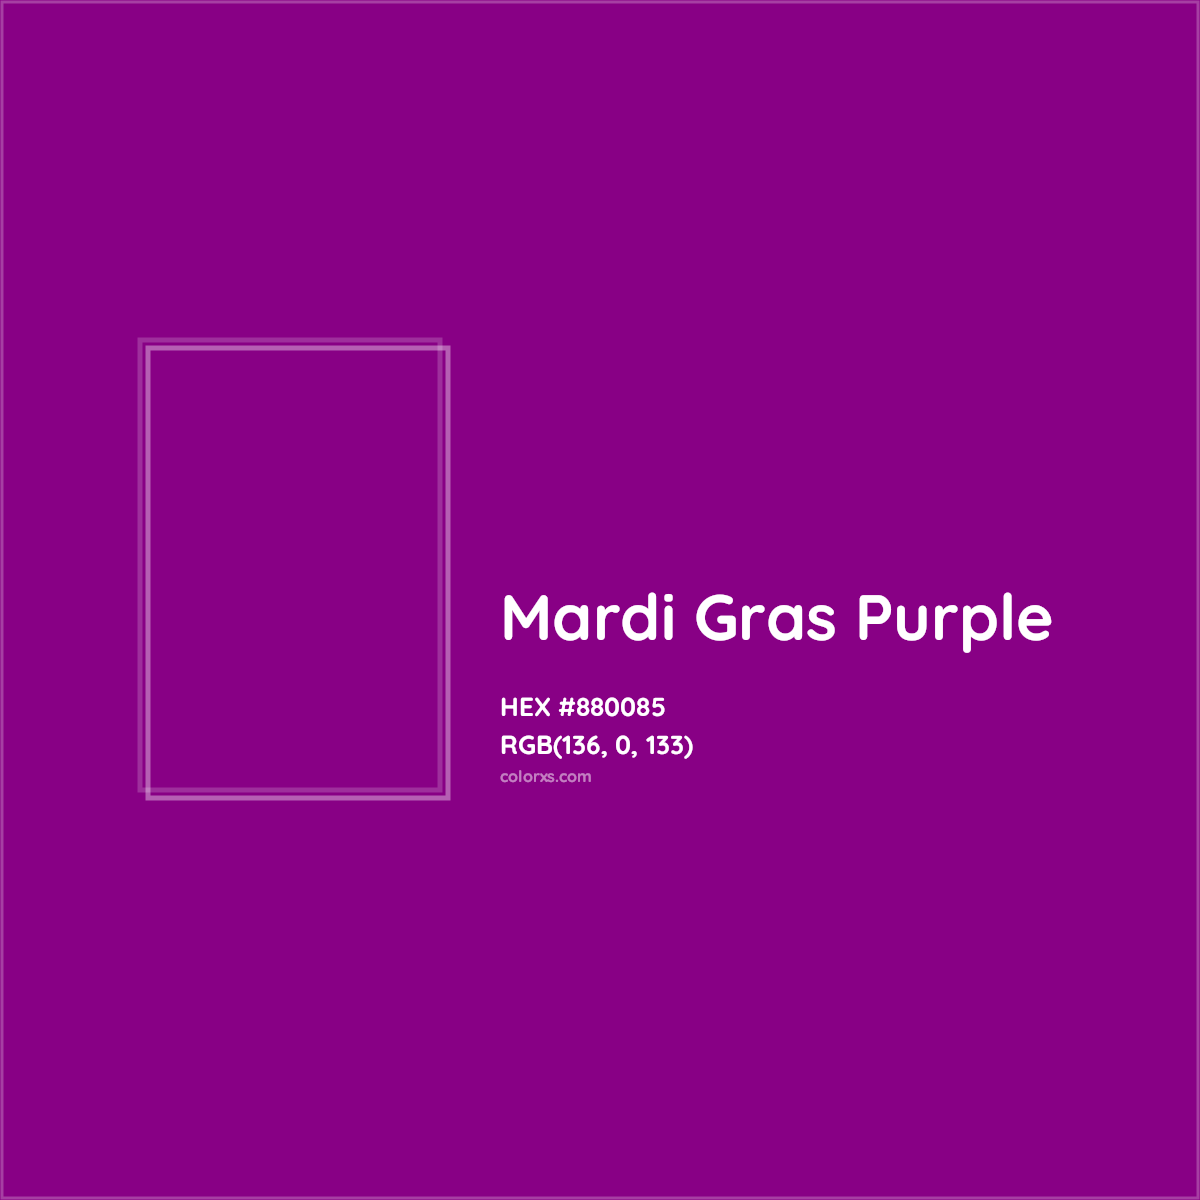 HEX #880085 Mardi Gras Purple Color - Color Code